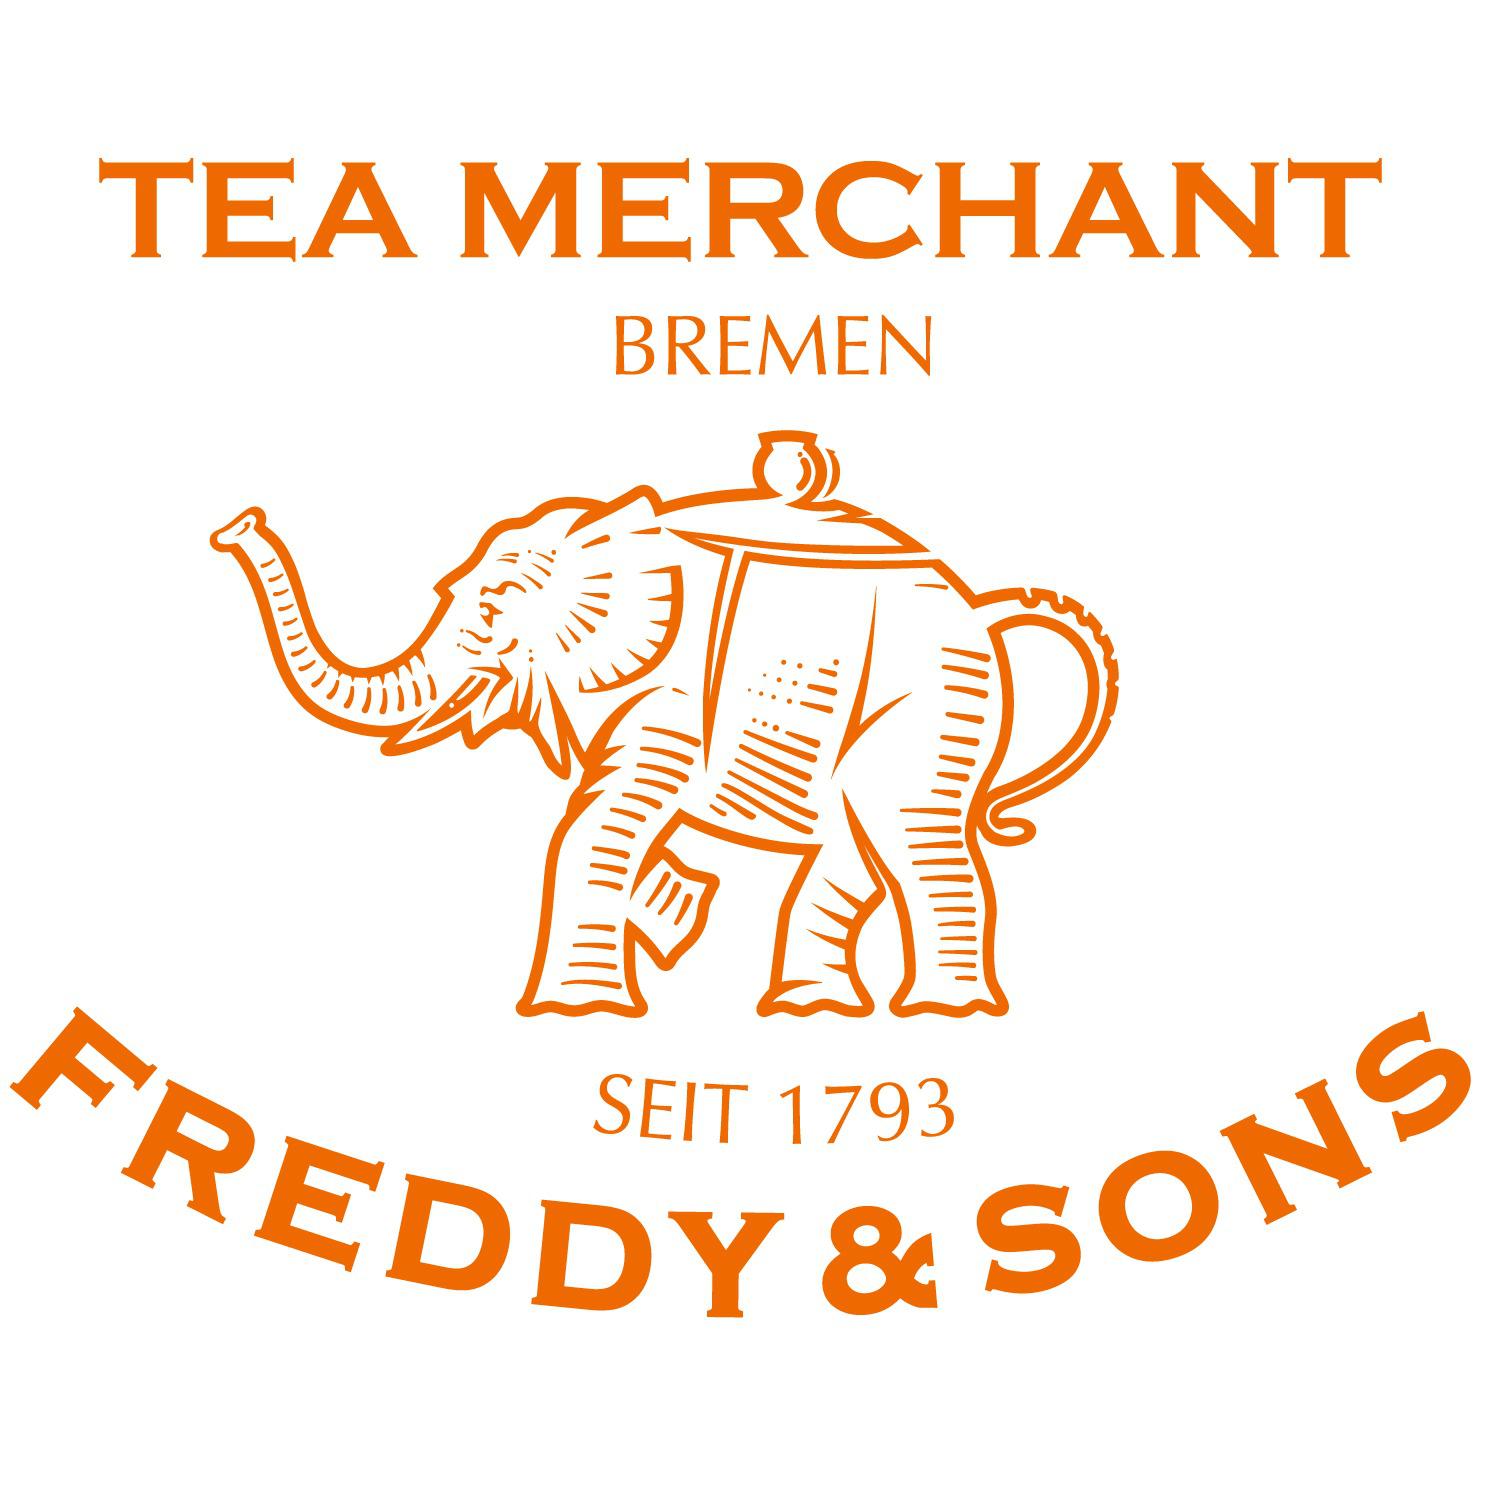 Tea Merchant Freddy & Sons